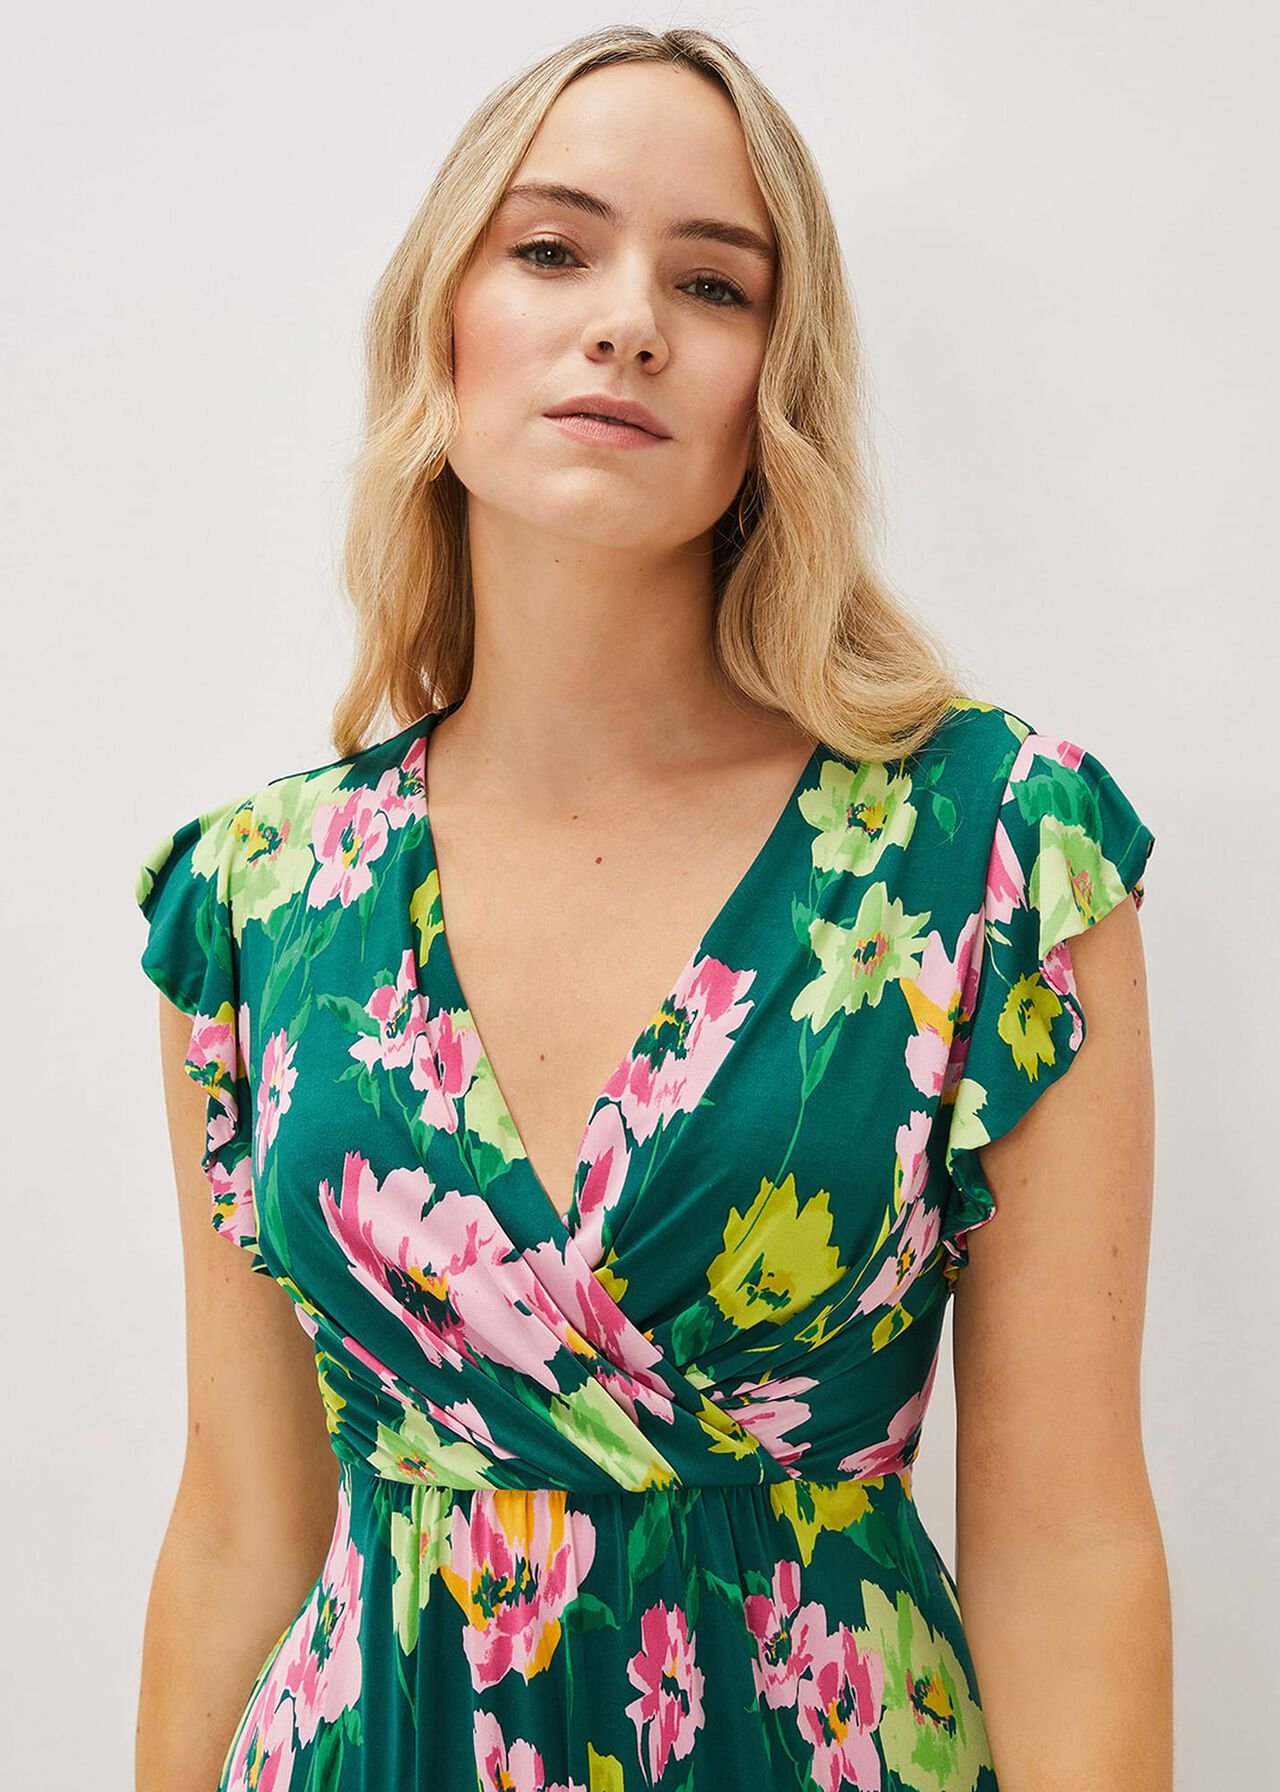 Effie Floral Jersey Maxi Dress